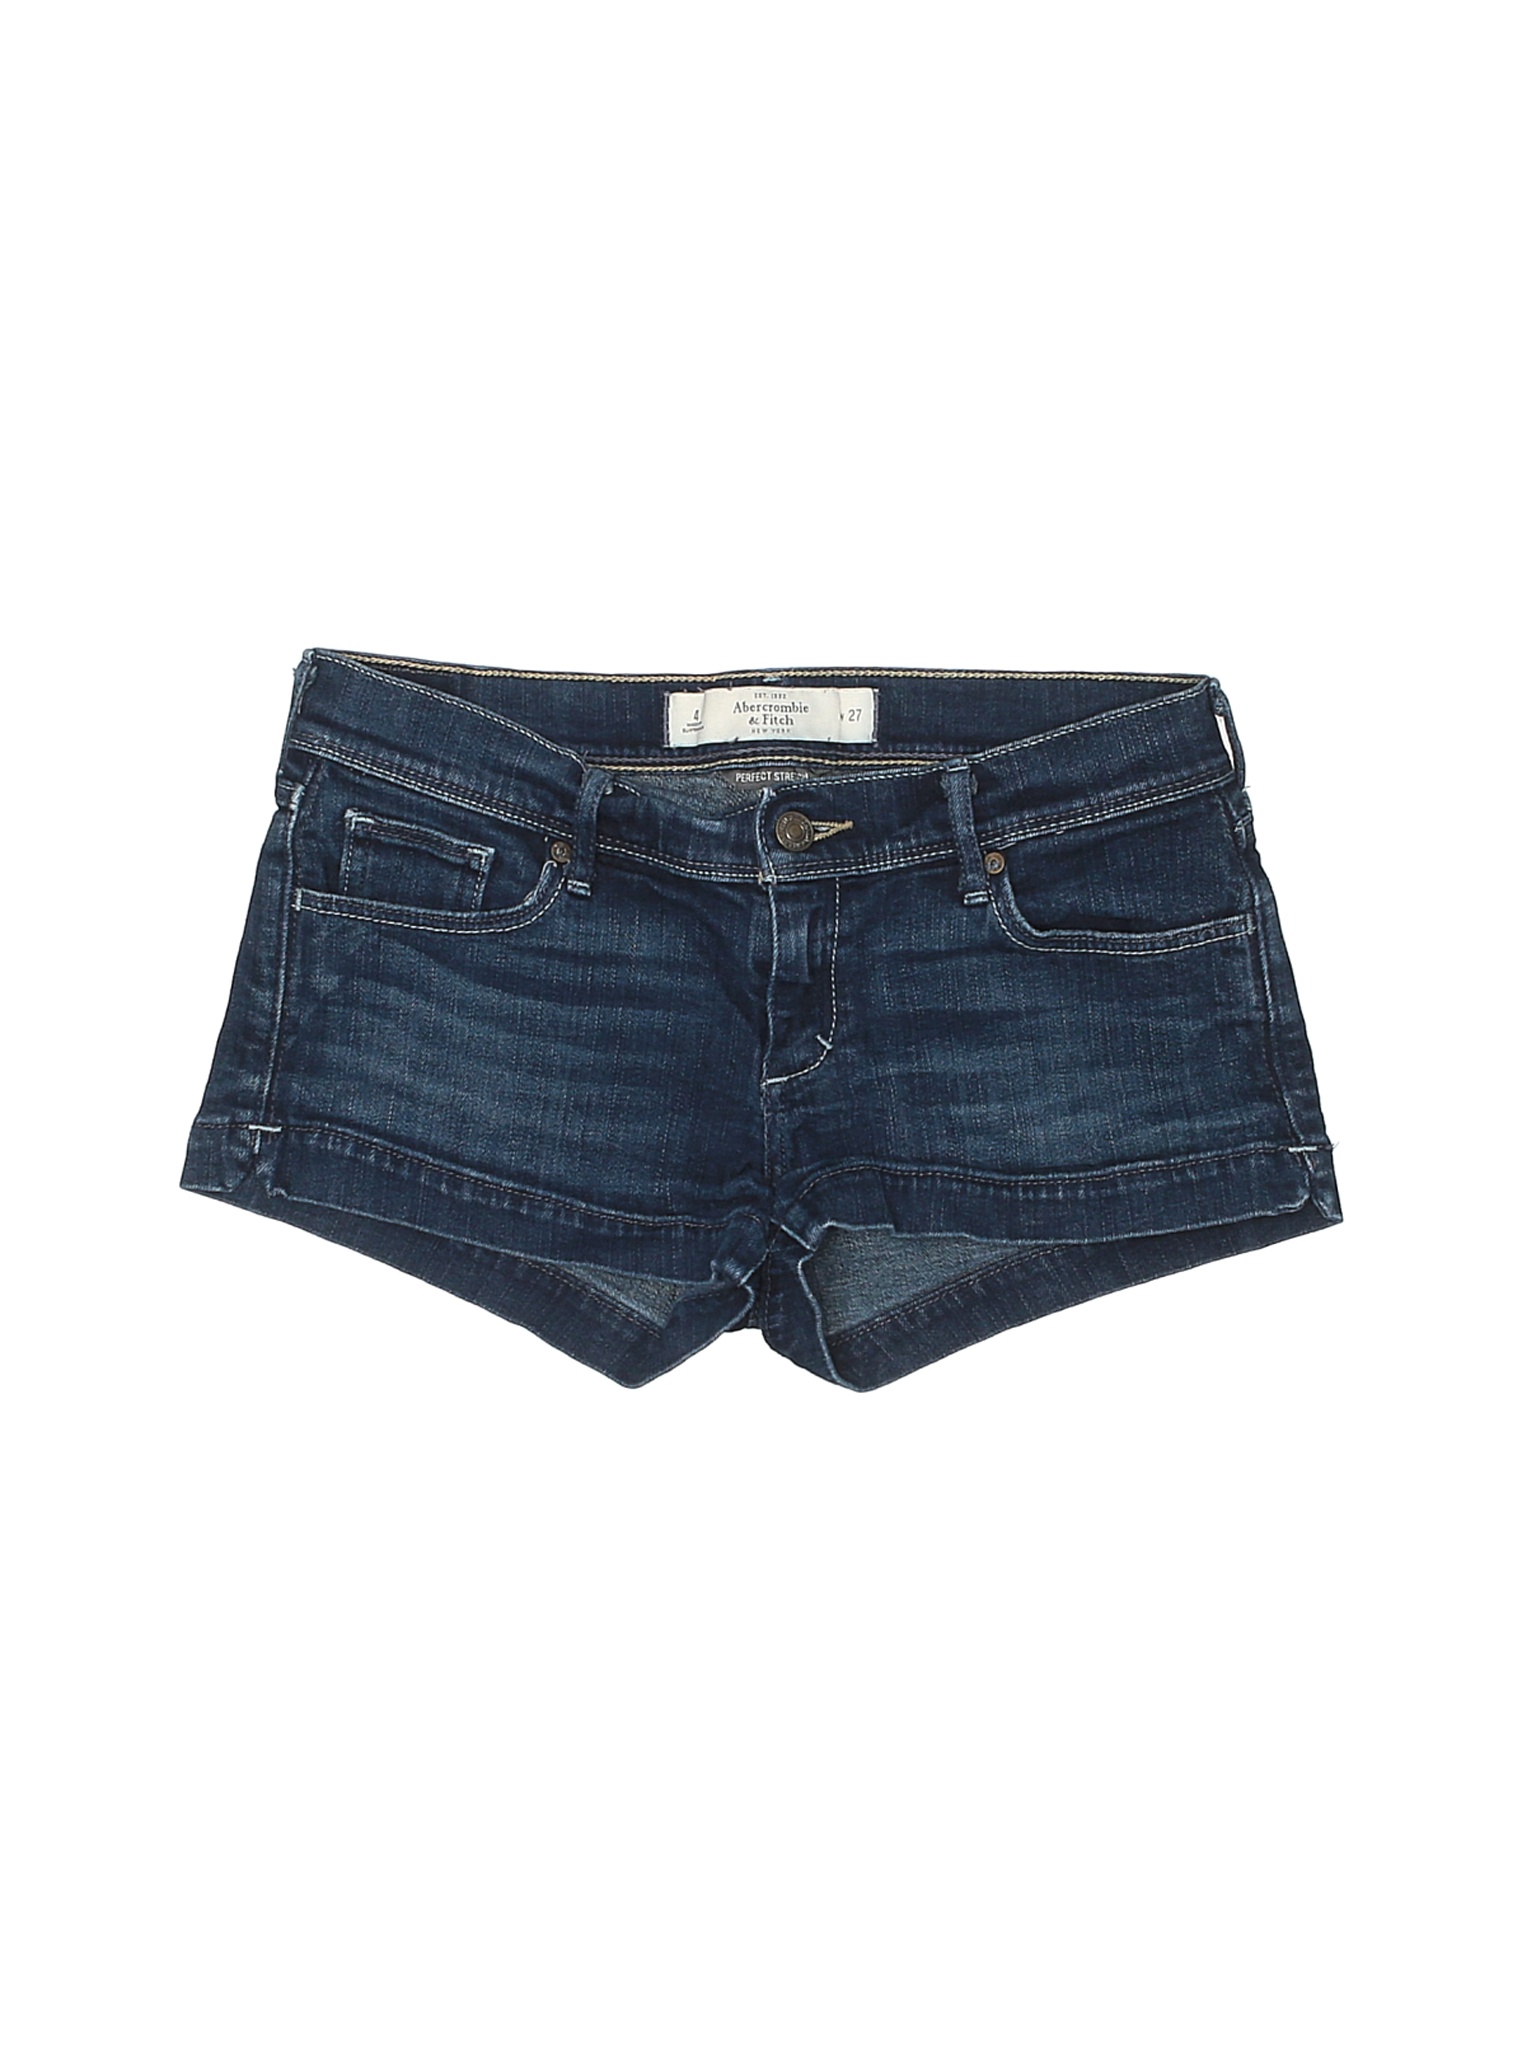 Abercrombie & Fitch Women Blue Denim Shorts 4 | eBay